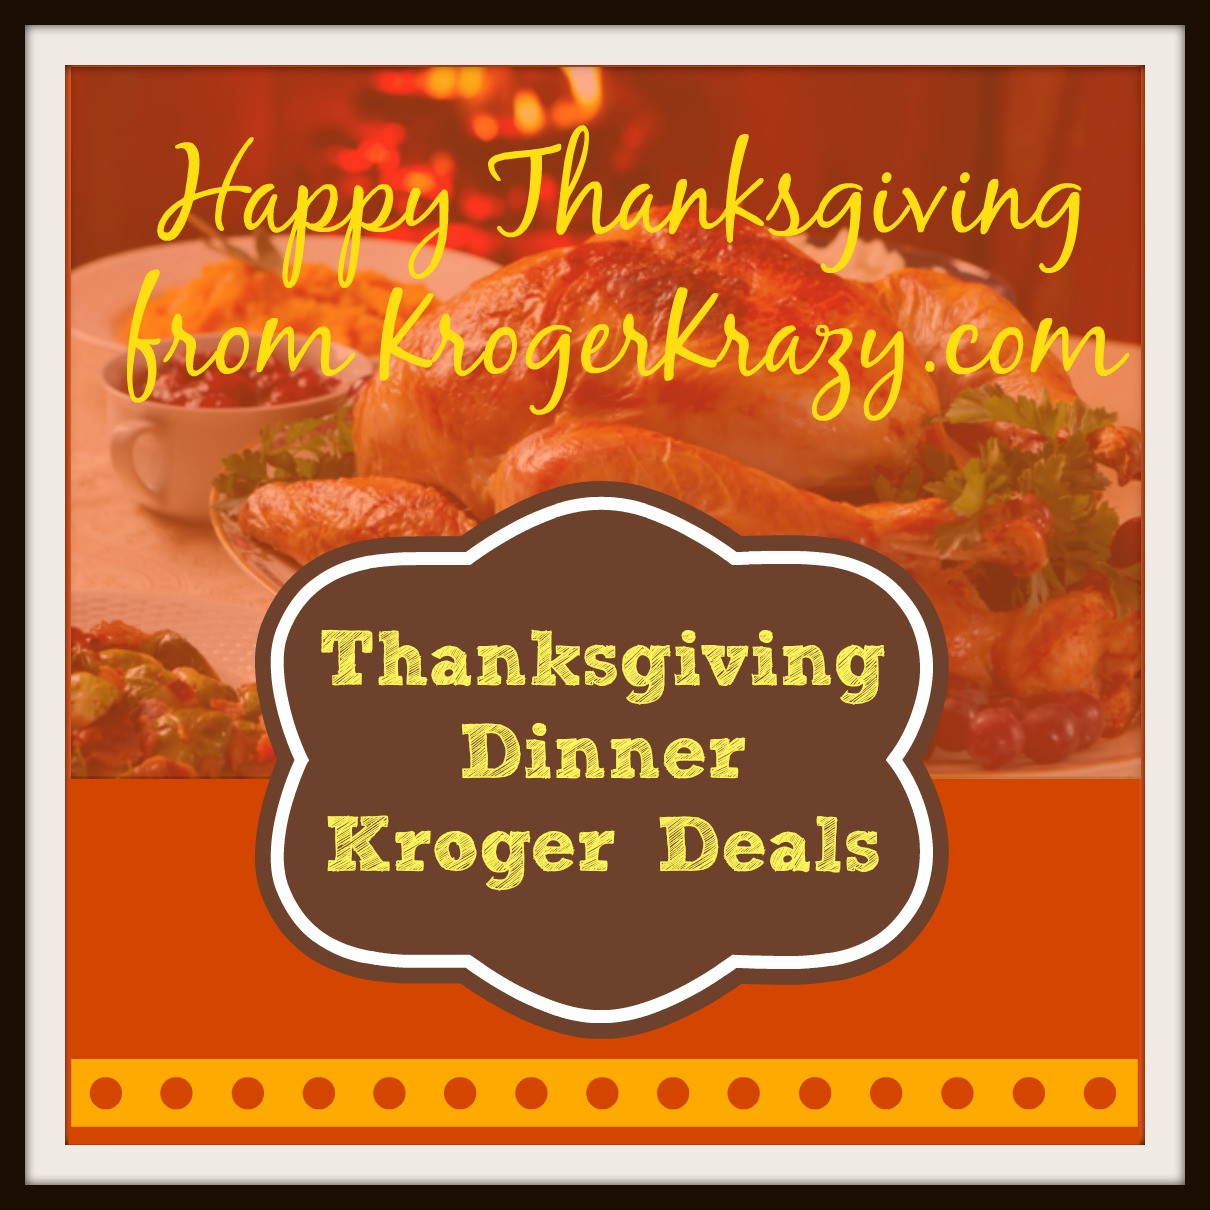 Kroger Thanksgiving Turkey
 Roundup of Thanksgiving Dinner Essentials at Kroger